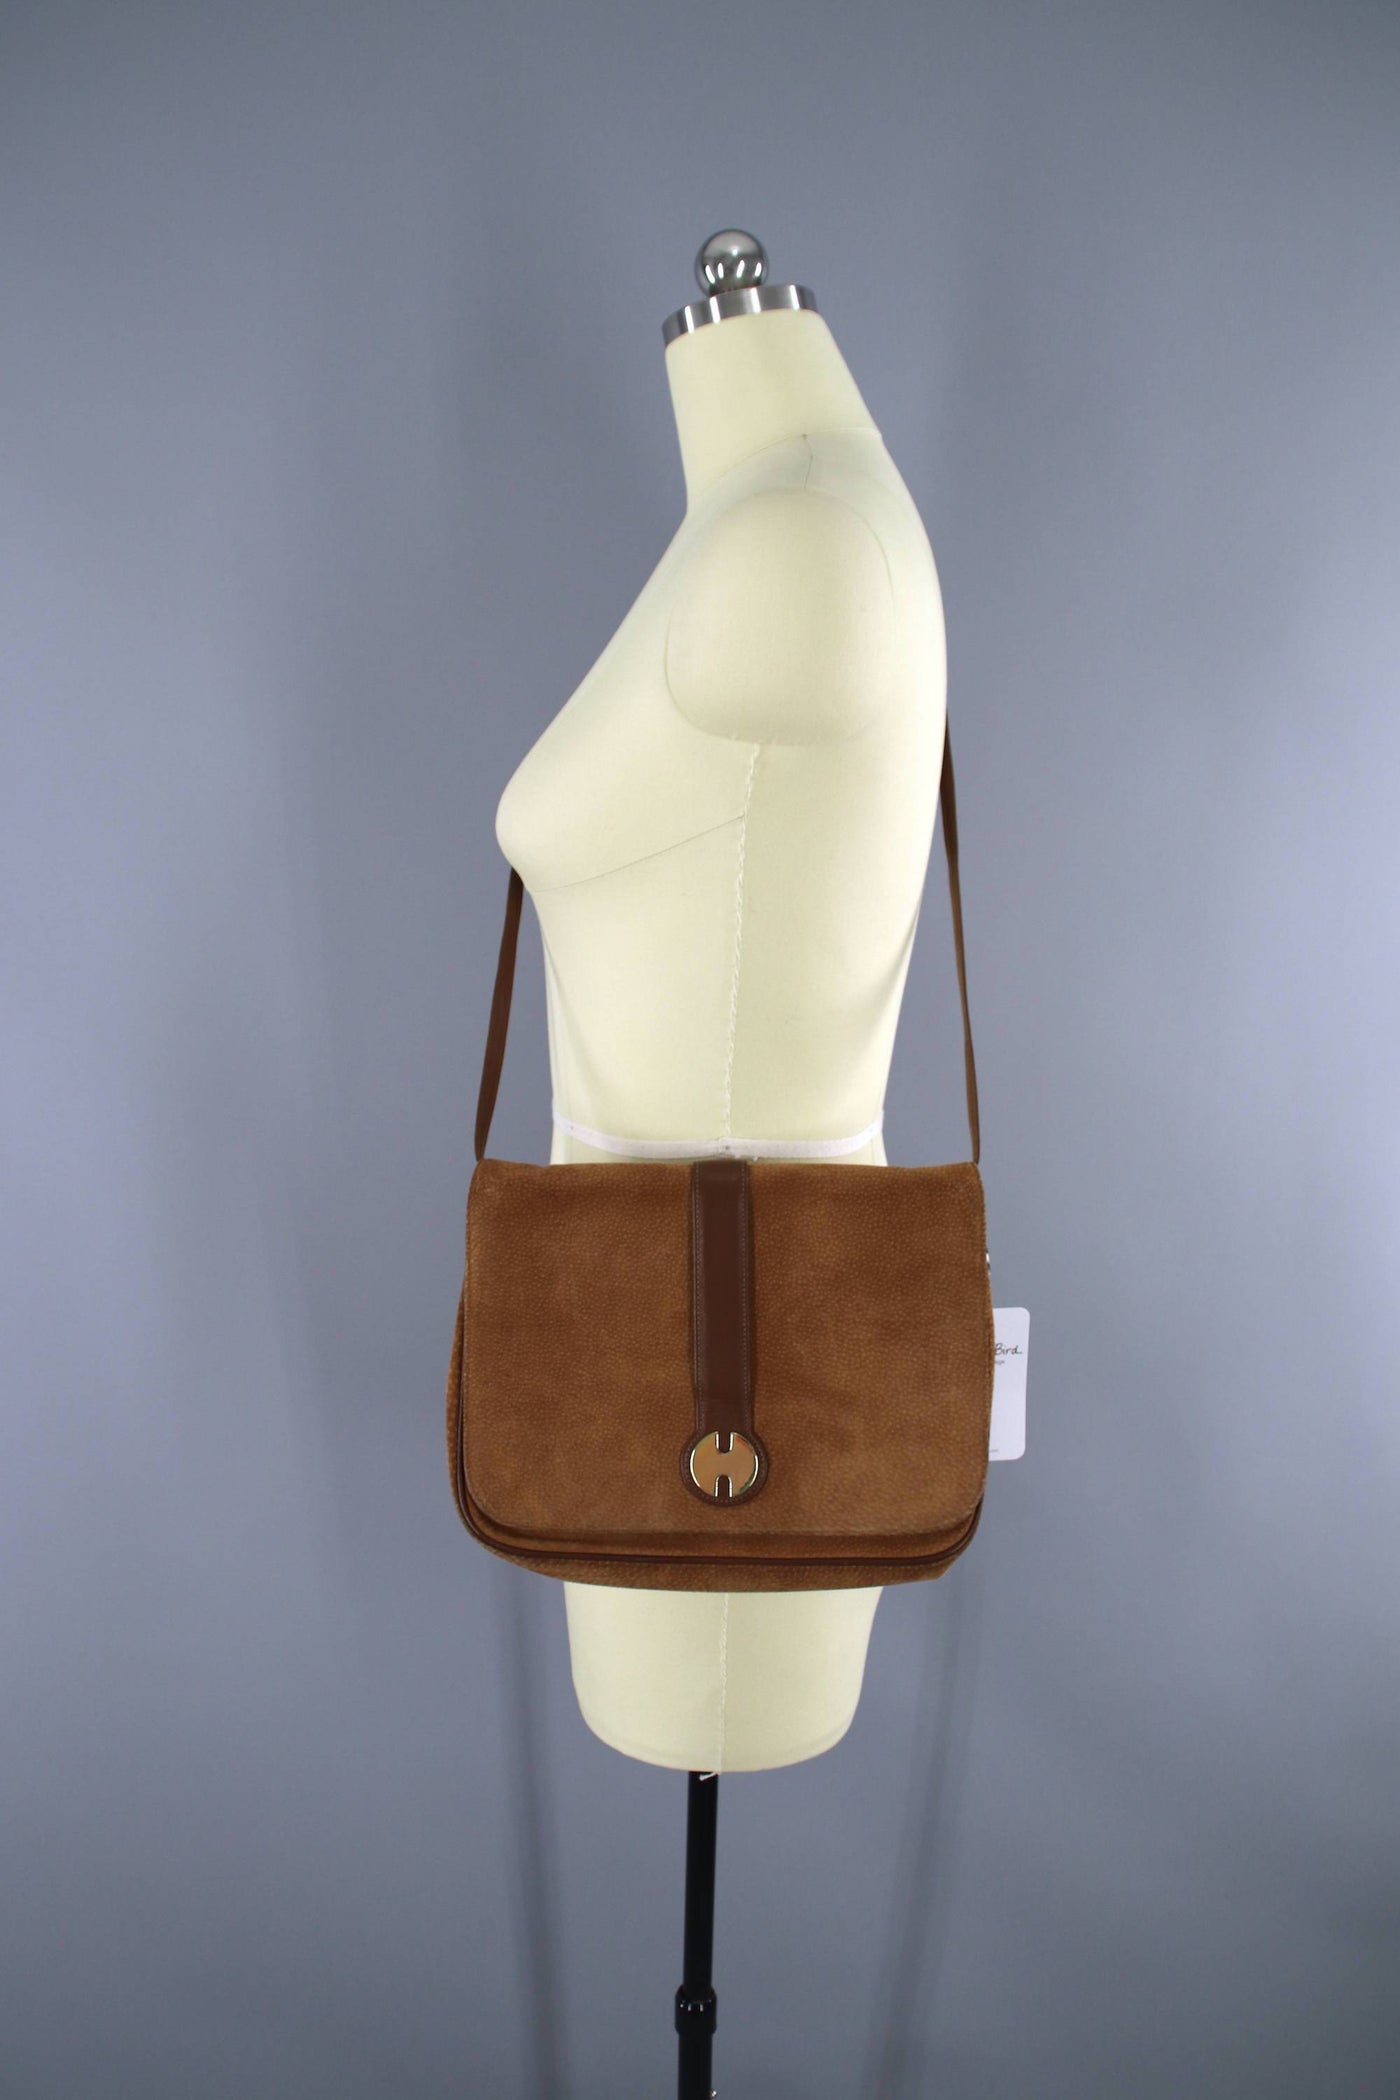 Vintage 1980s HALSTON Suede Shoulder Bag Clutch Purse - ThisBlueBird